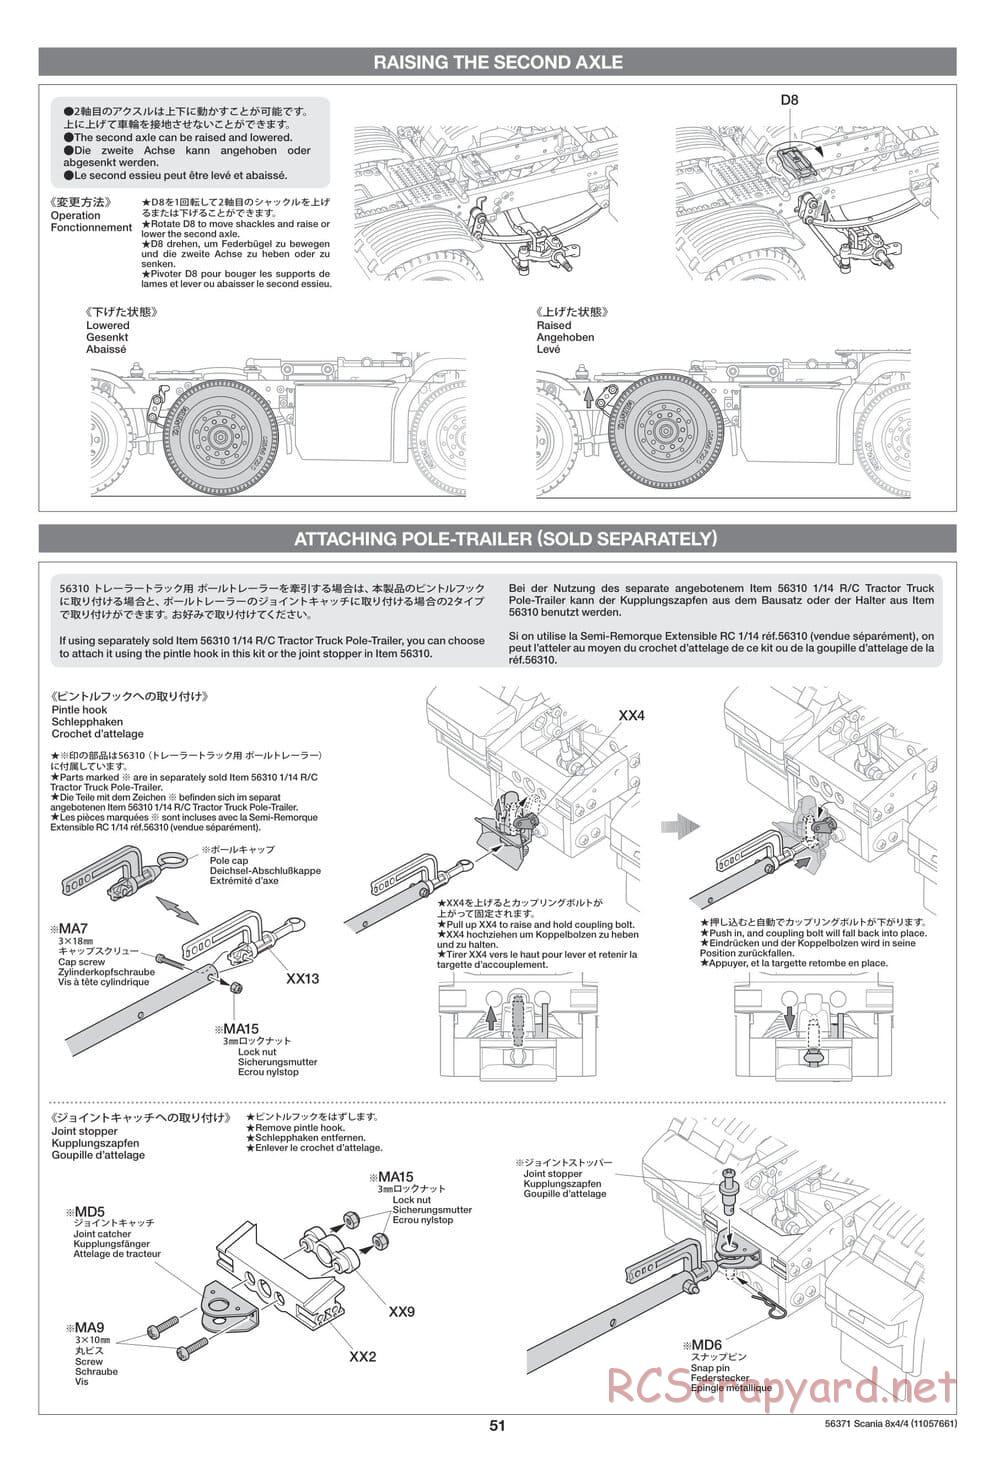 Tamiya - Scania 770 S 8x4/4 Chassis - Manual - Page 51